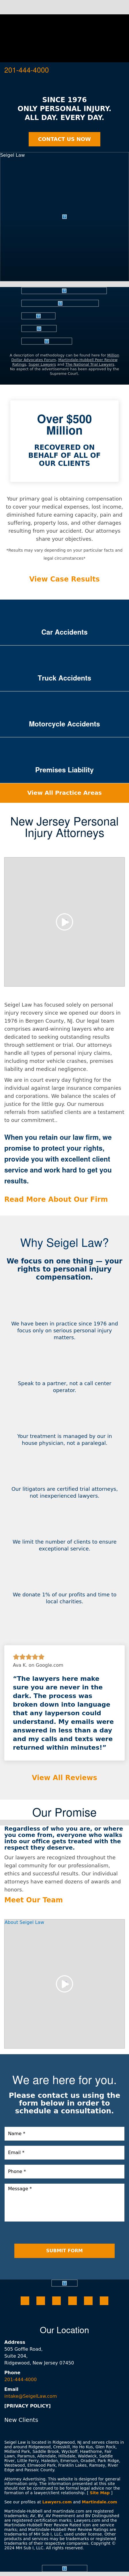 Seigel Law - Ridgewood NJ Lawyers